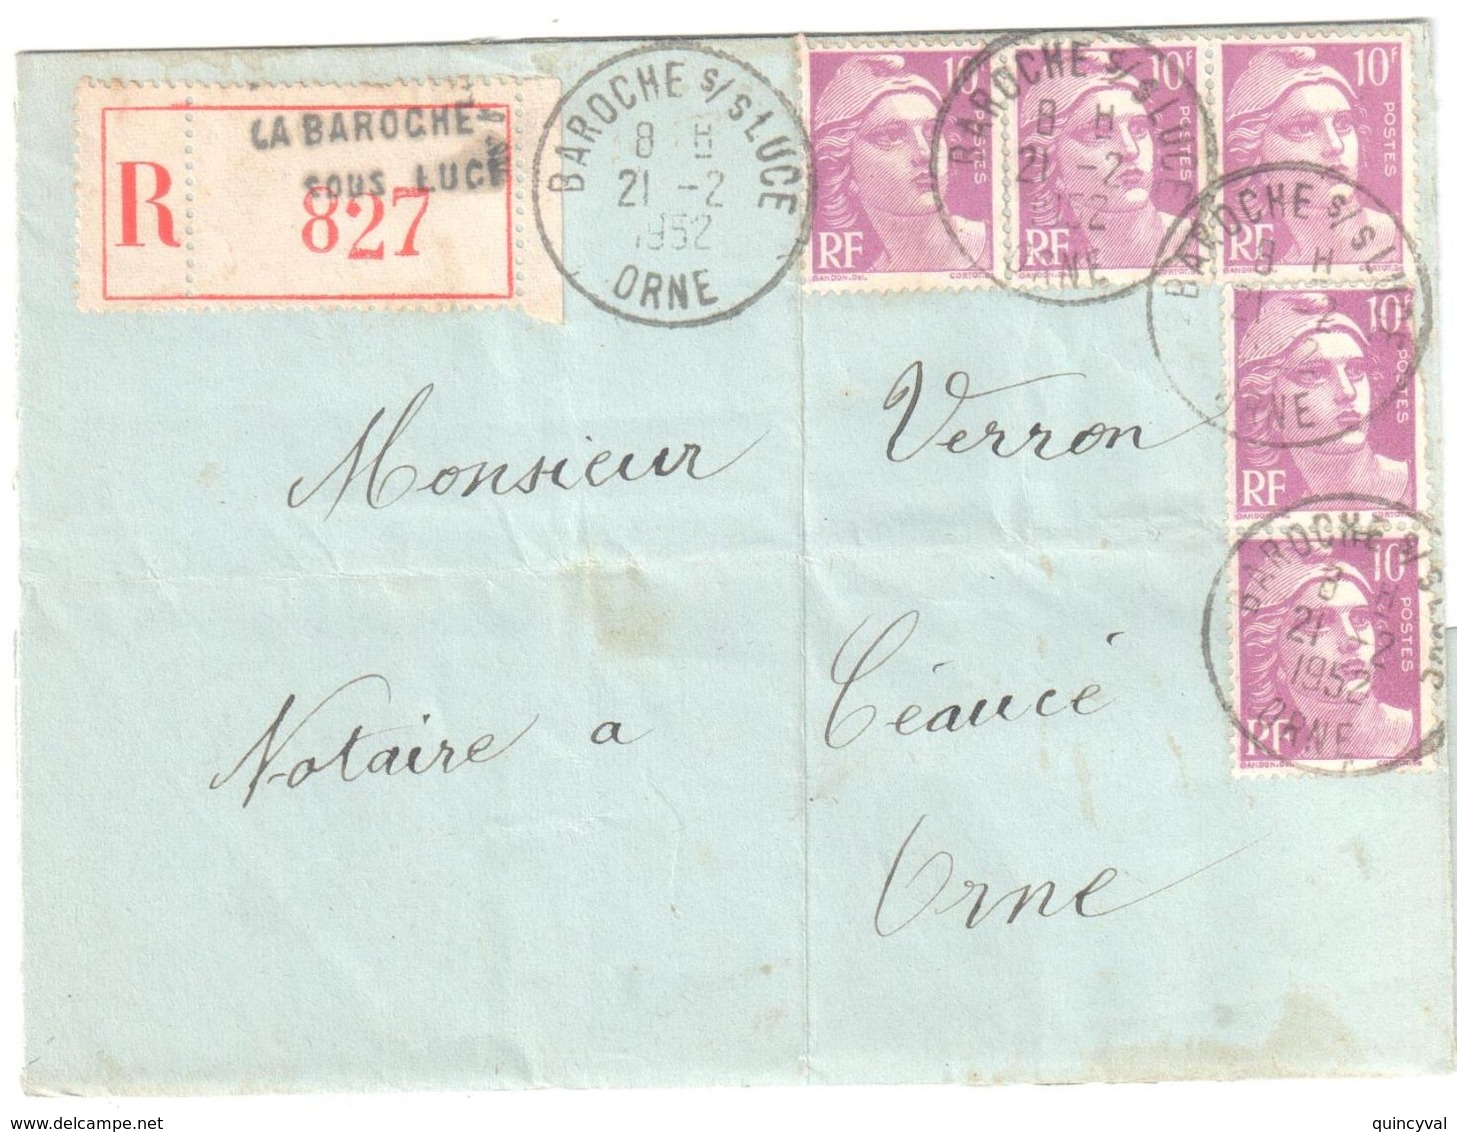 BAROCHE Sous LUCE (LA) Orne Lettre Recommandée 10 F Gandon Lilas Yv 811 Ob 21 2 1952 - Cartas & Documentos